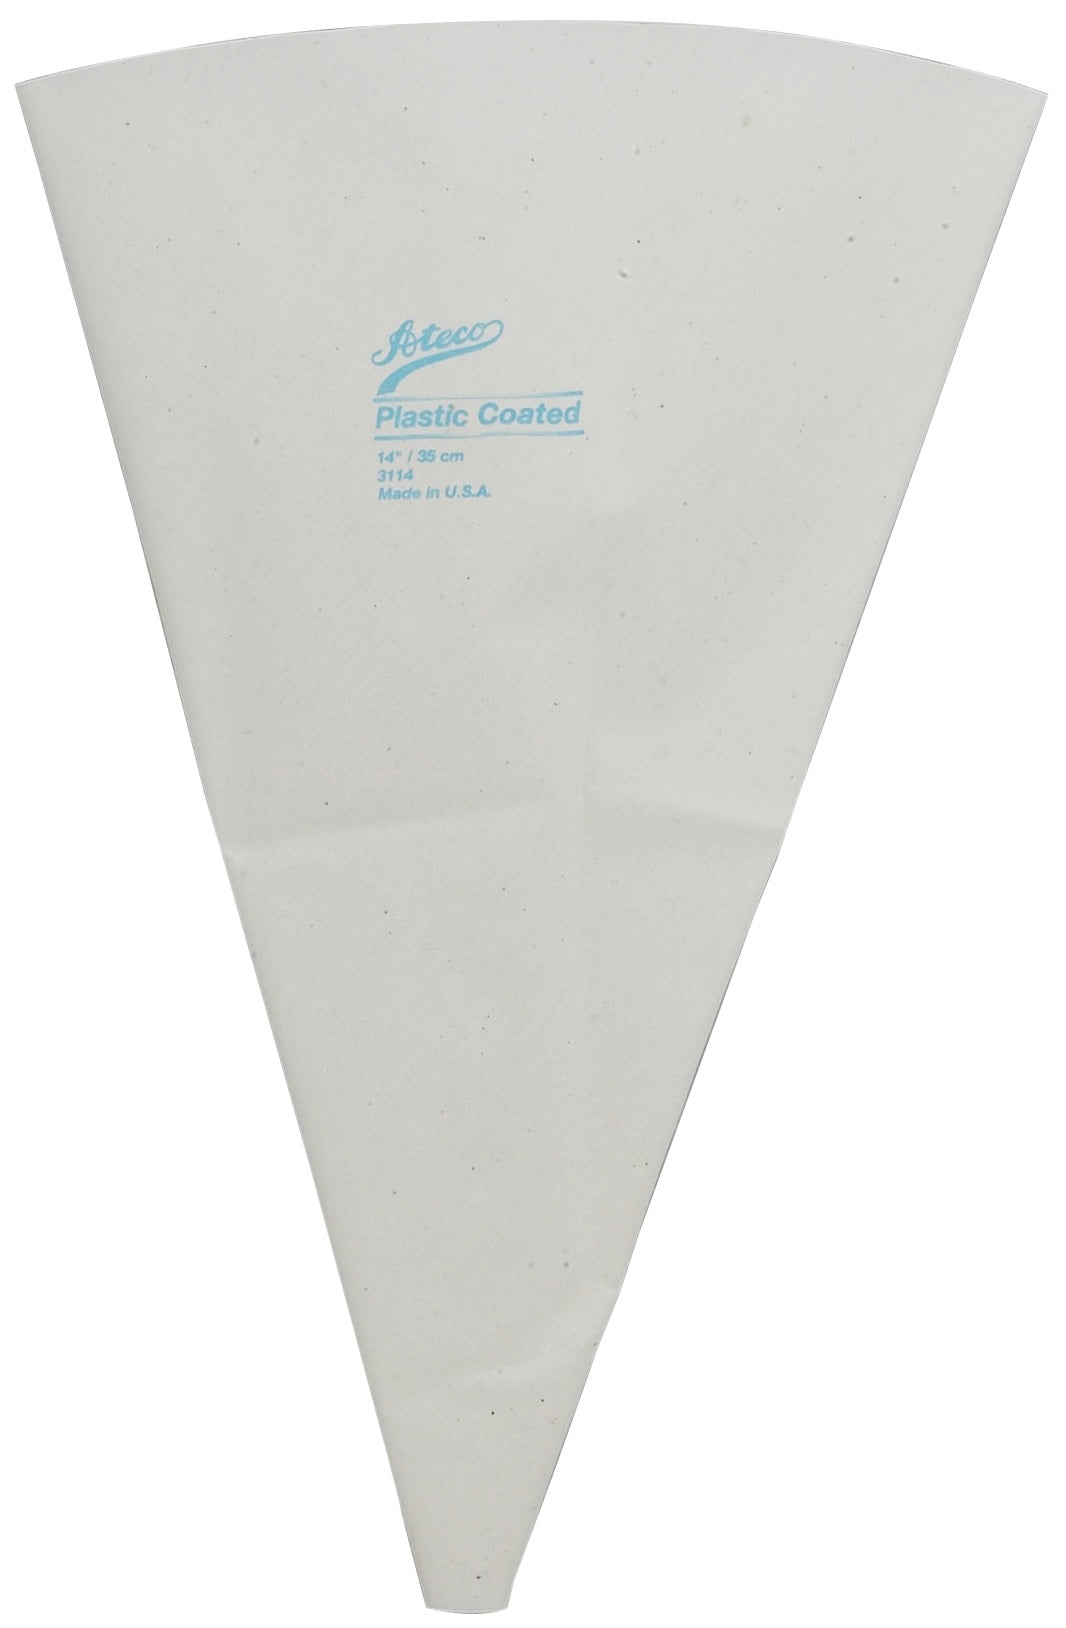 Ateco 2321 Plastic Coated Cloth Pastry Bag, White